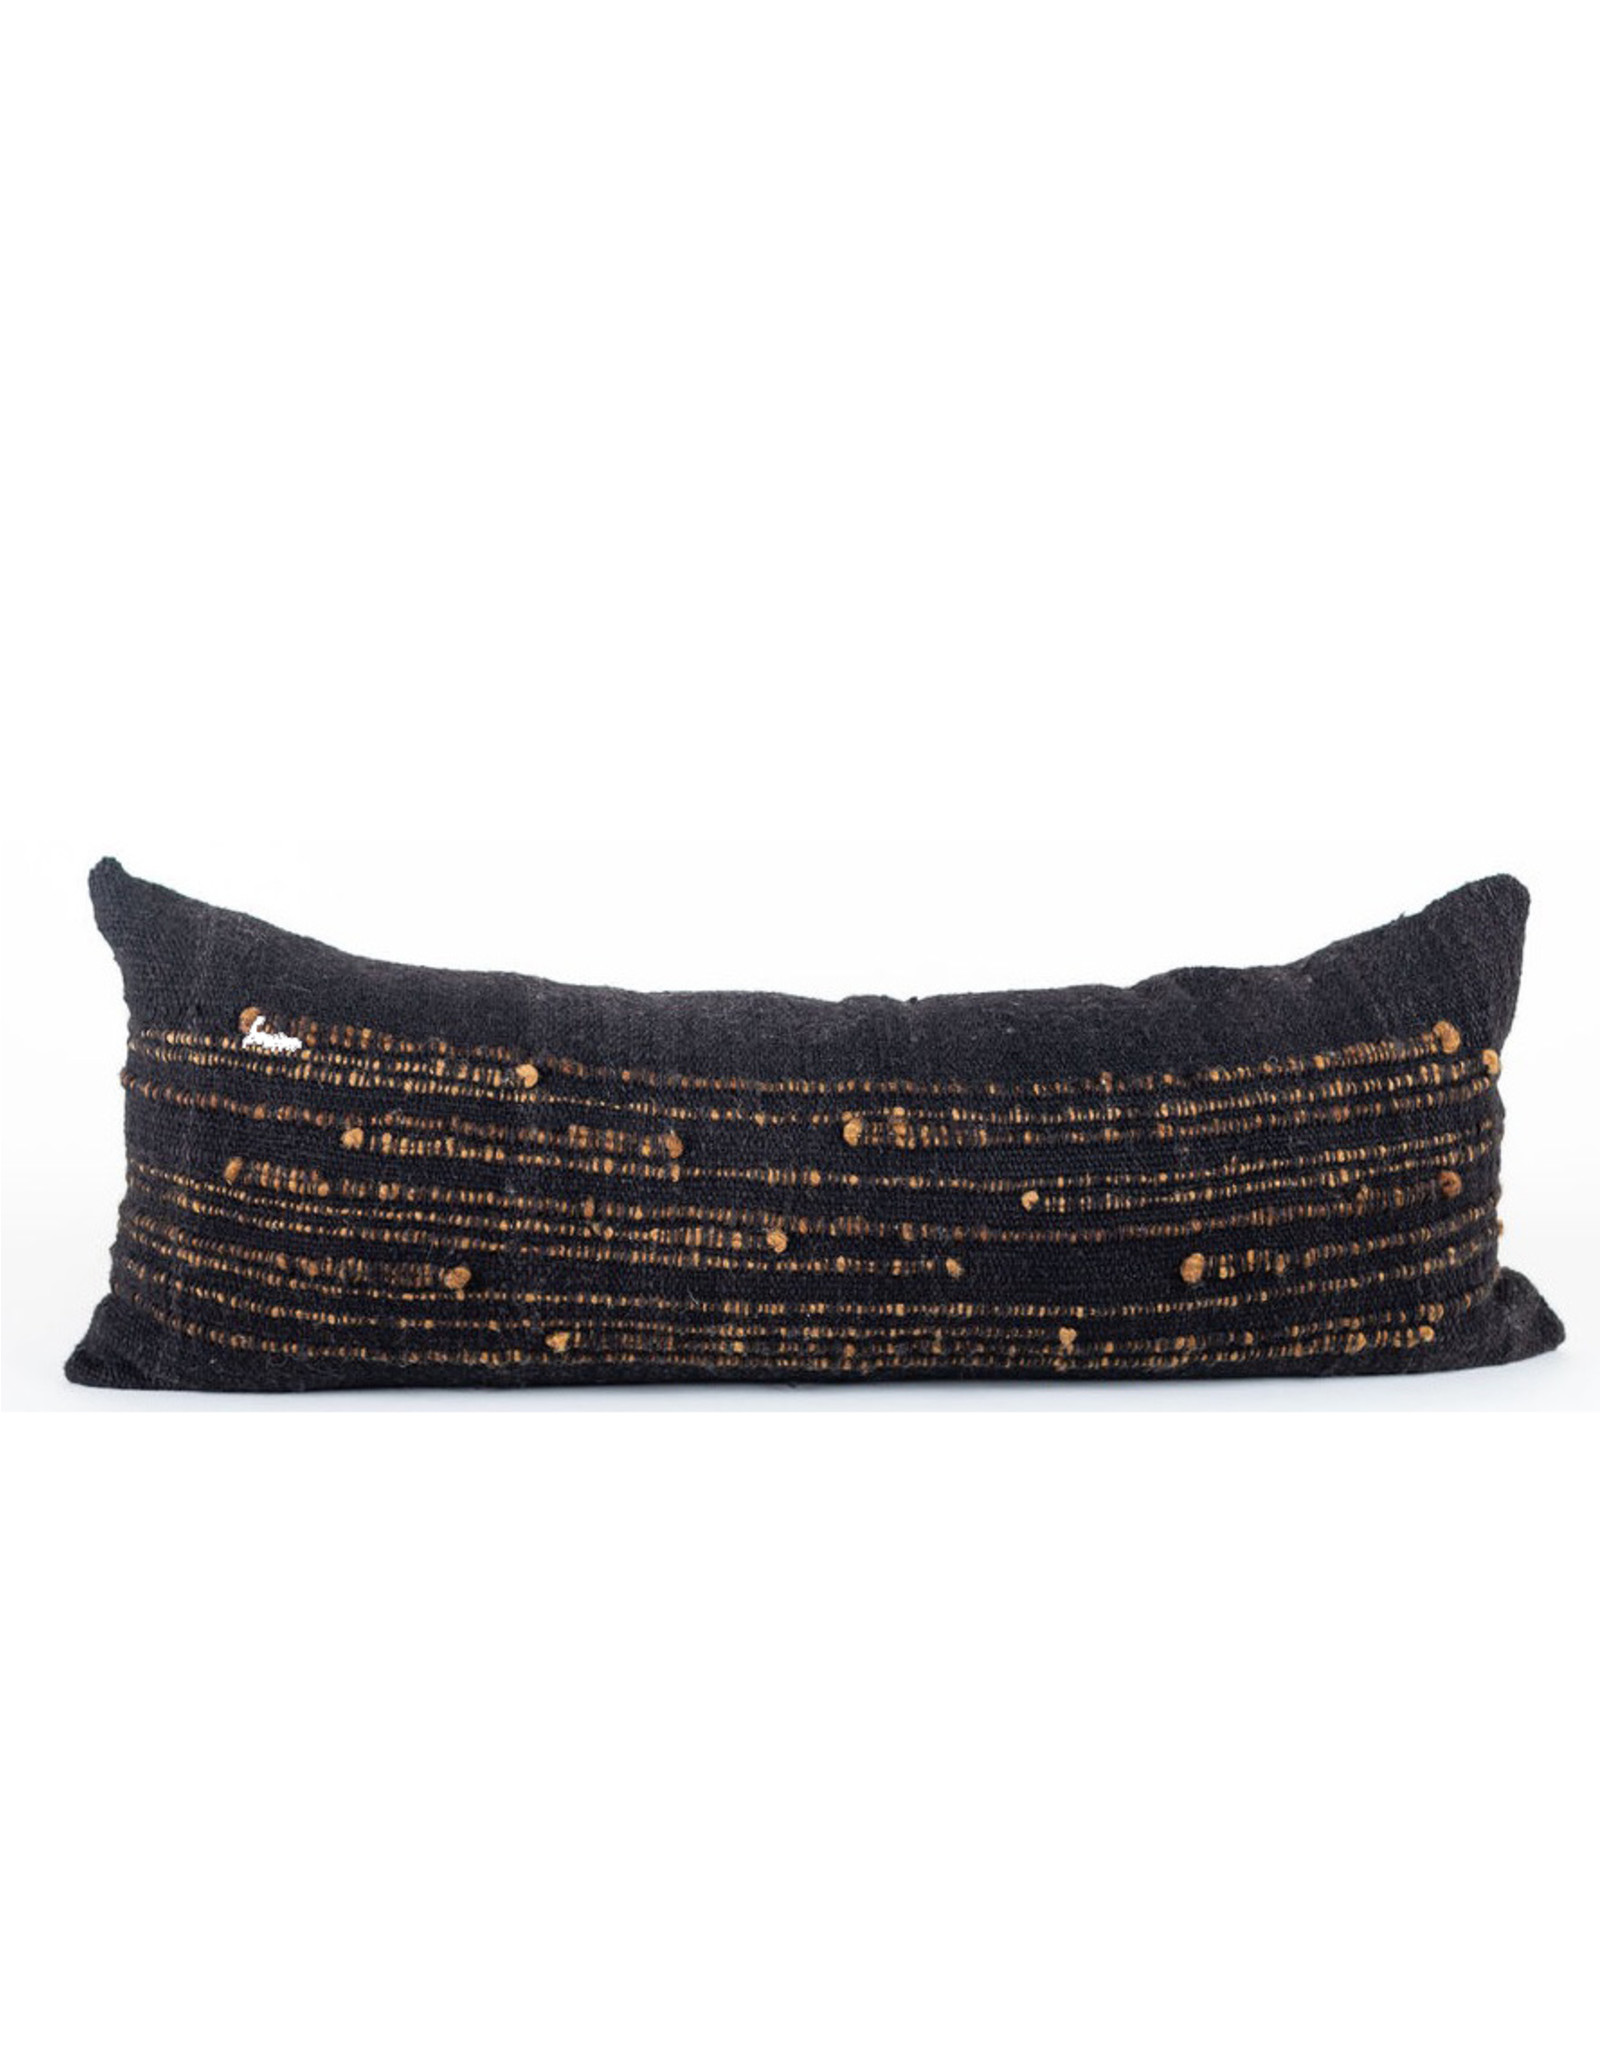 Black & Gold Pillow, Chile 14x35